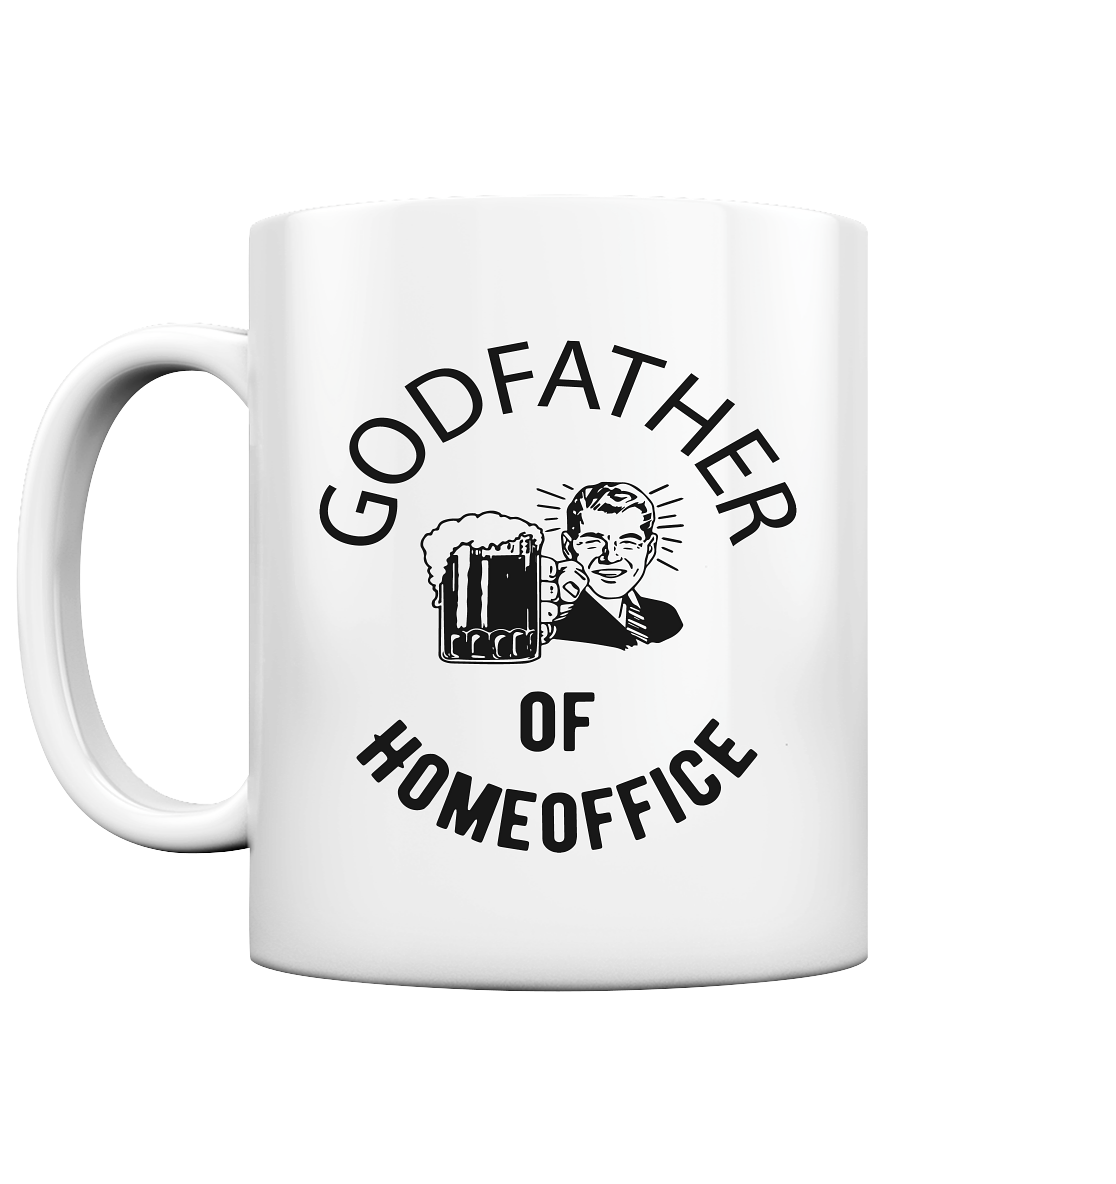 Godfather of Homeoffice - Tasse glossy